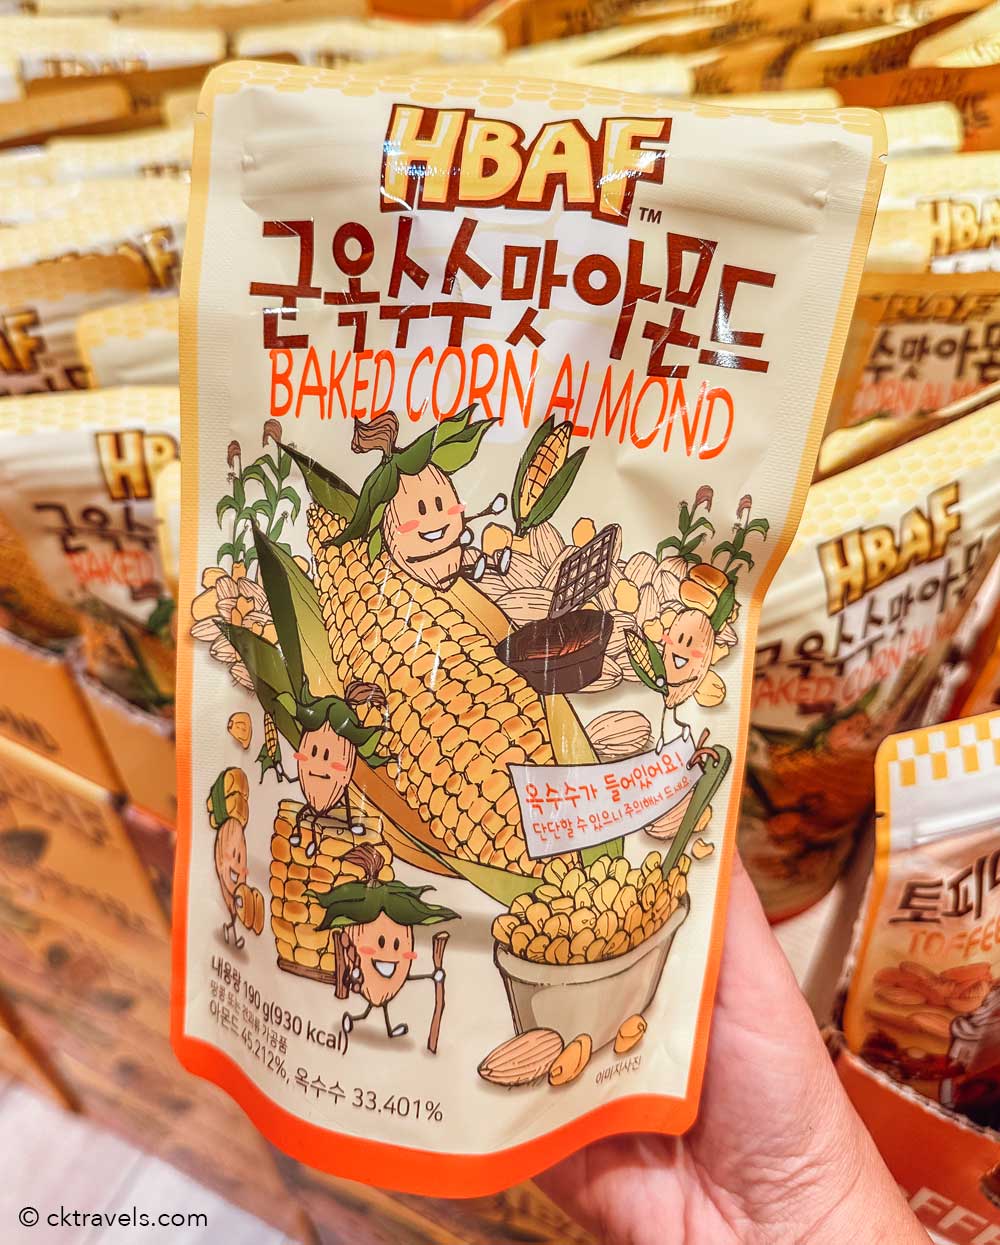 HBAF baked corn Almonds south korea